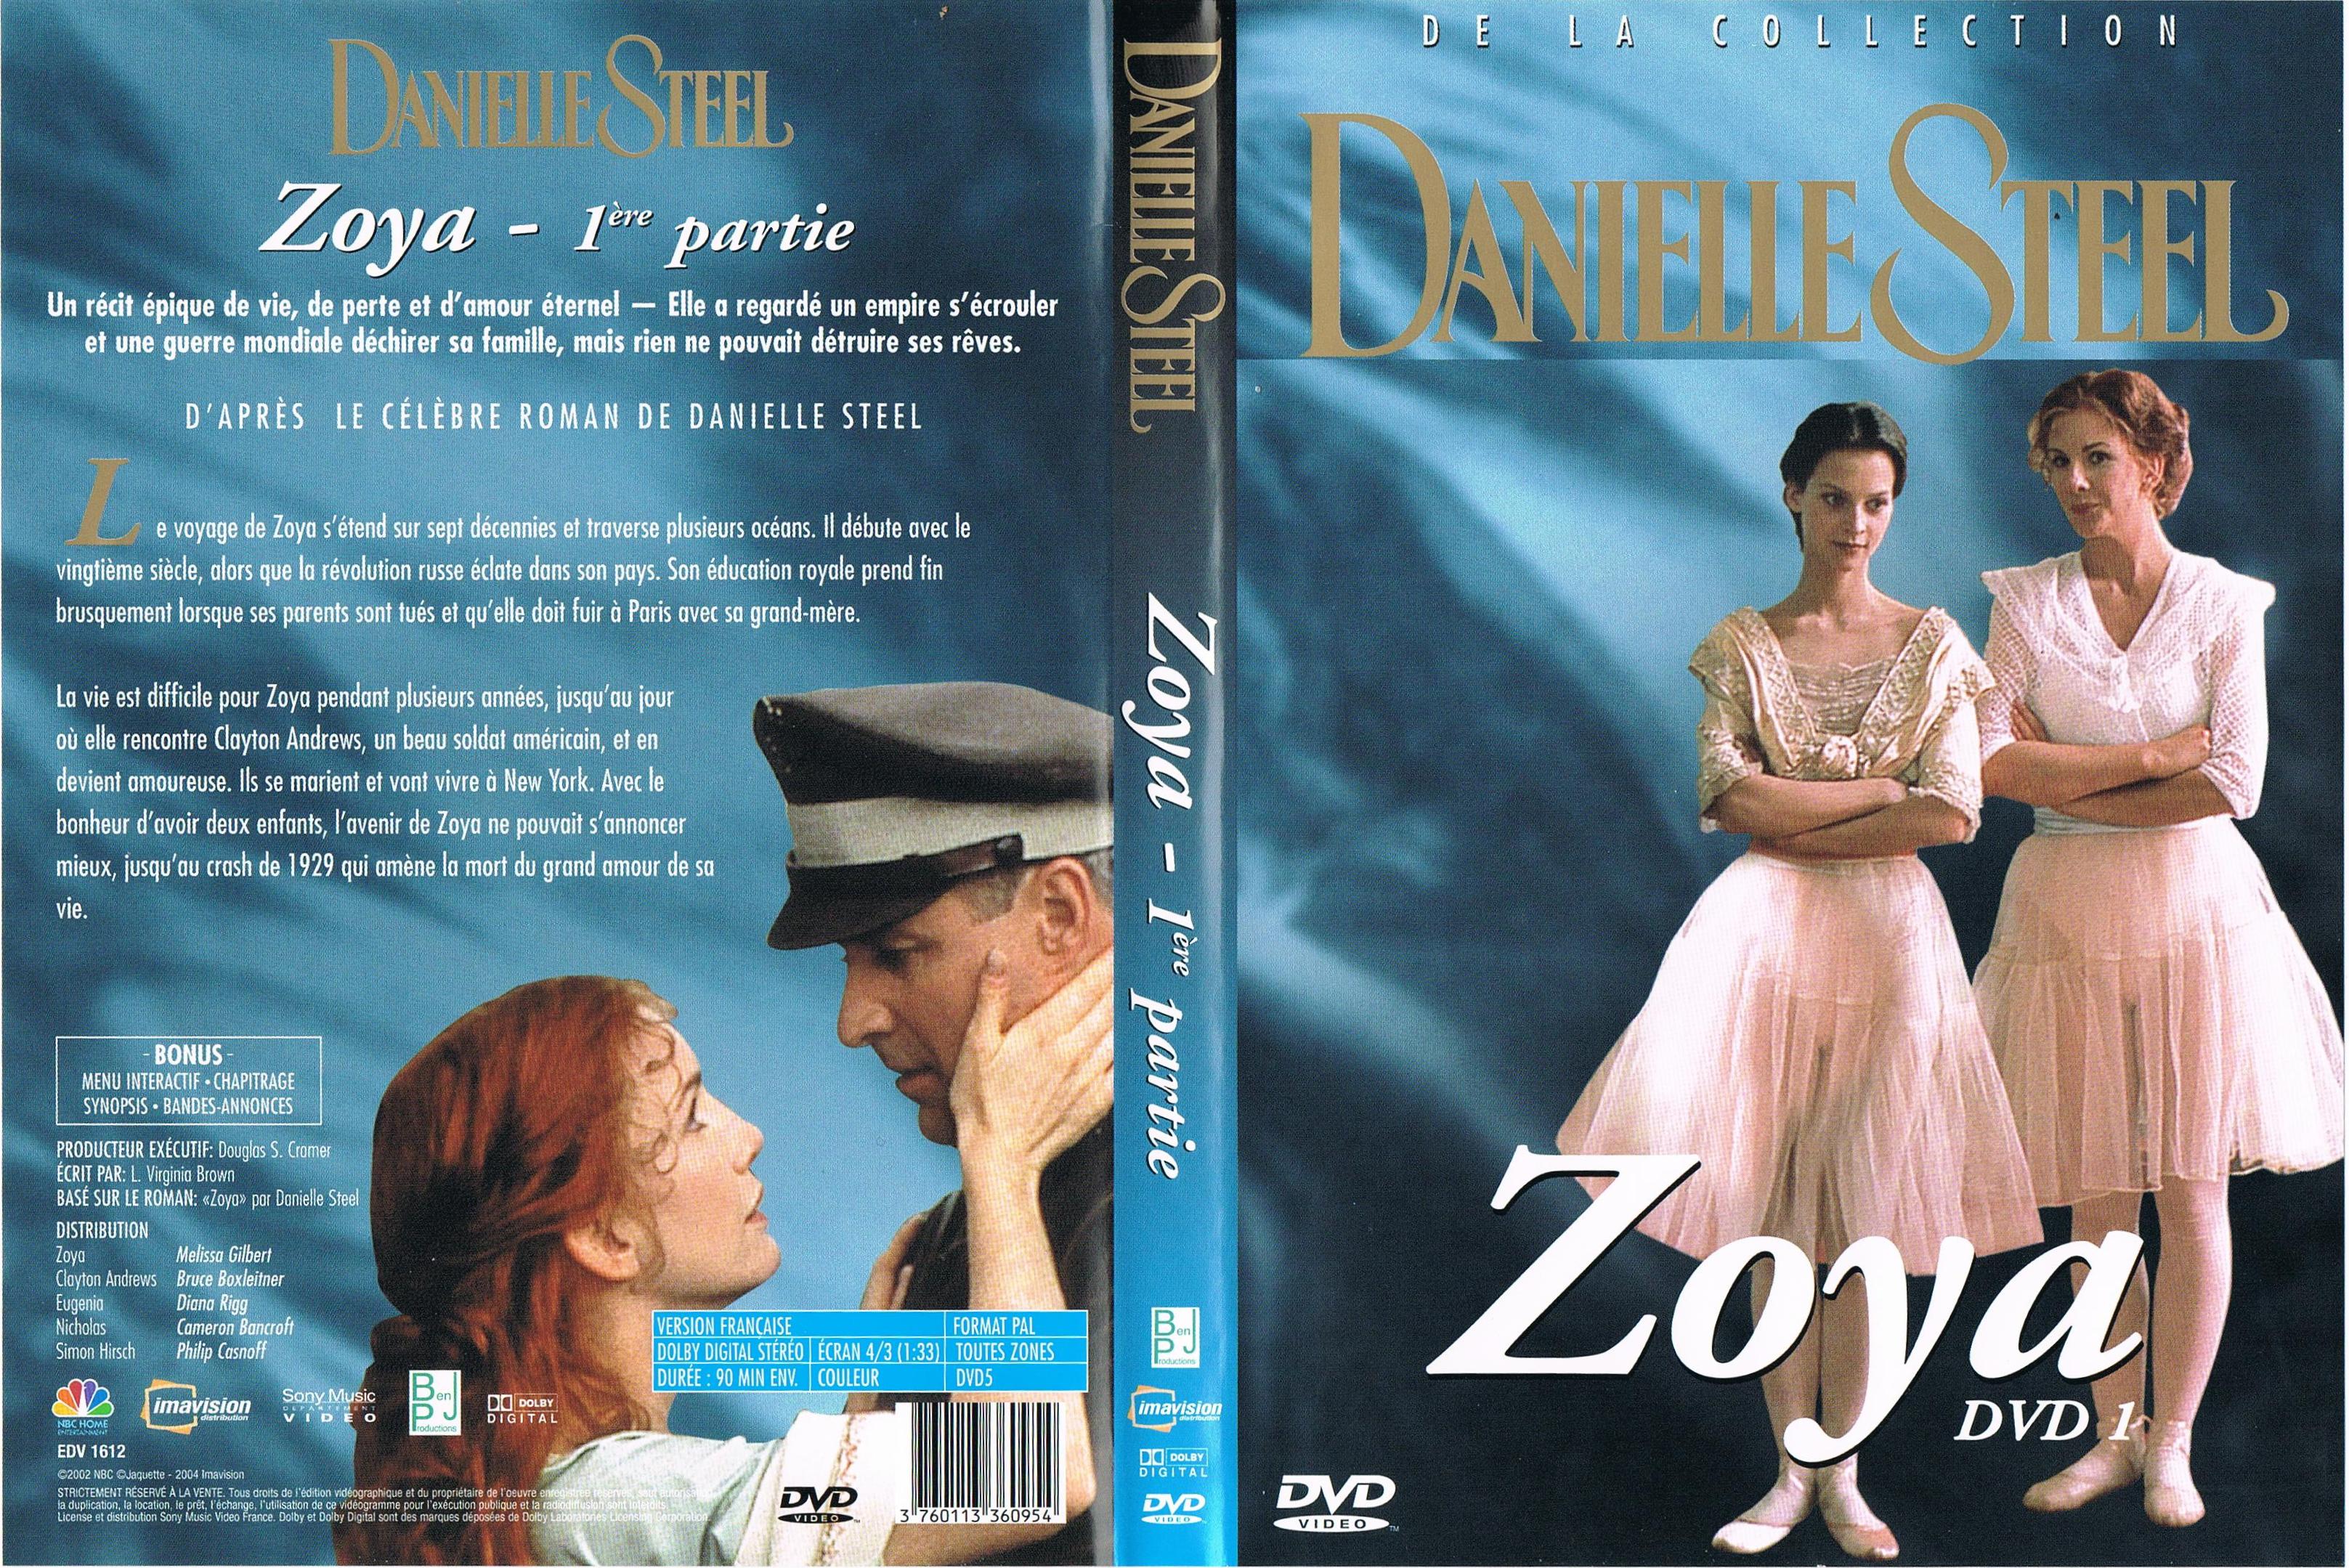 Jaquette DVD Zoya part 1